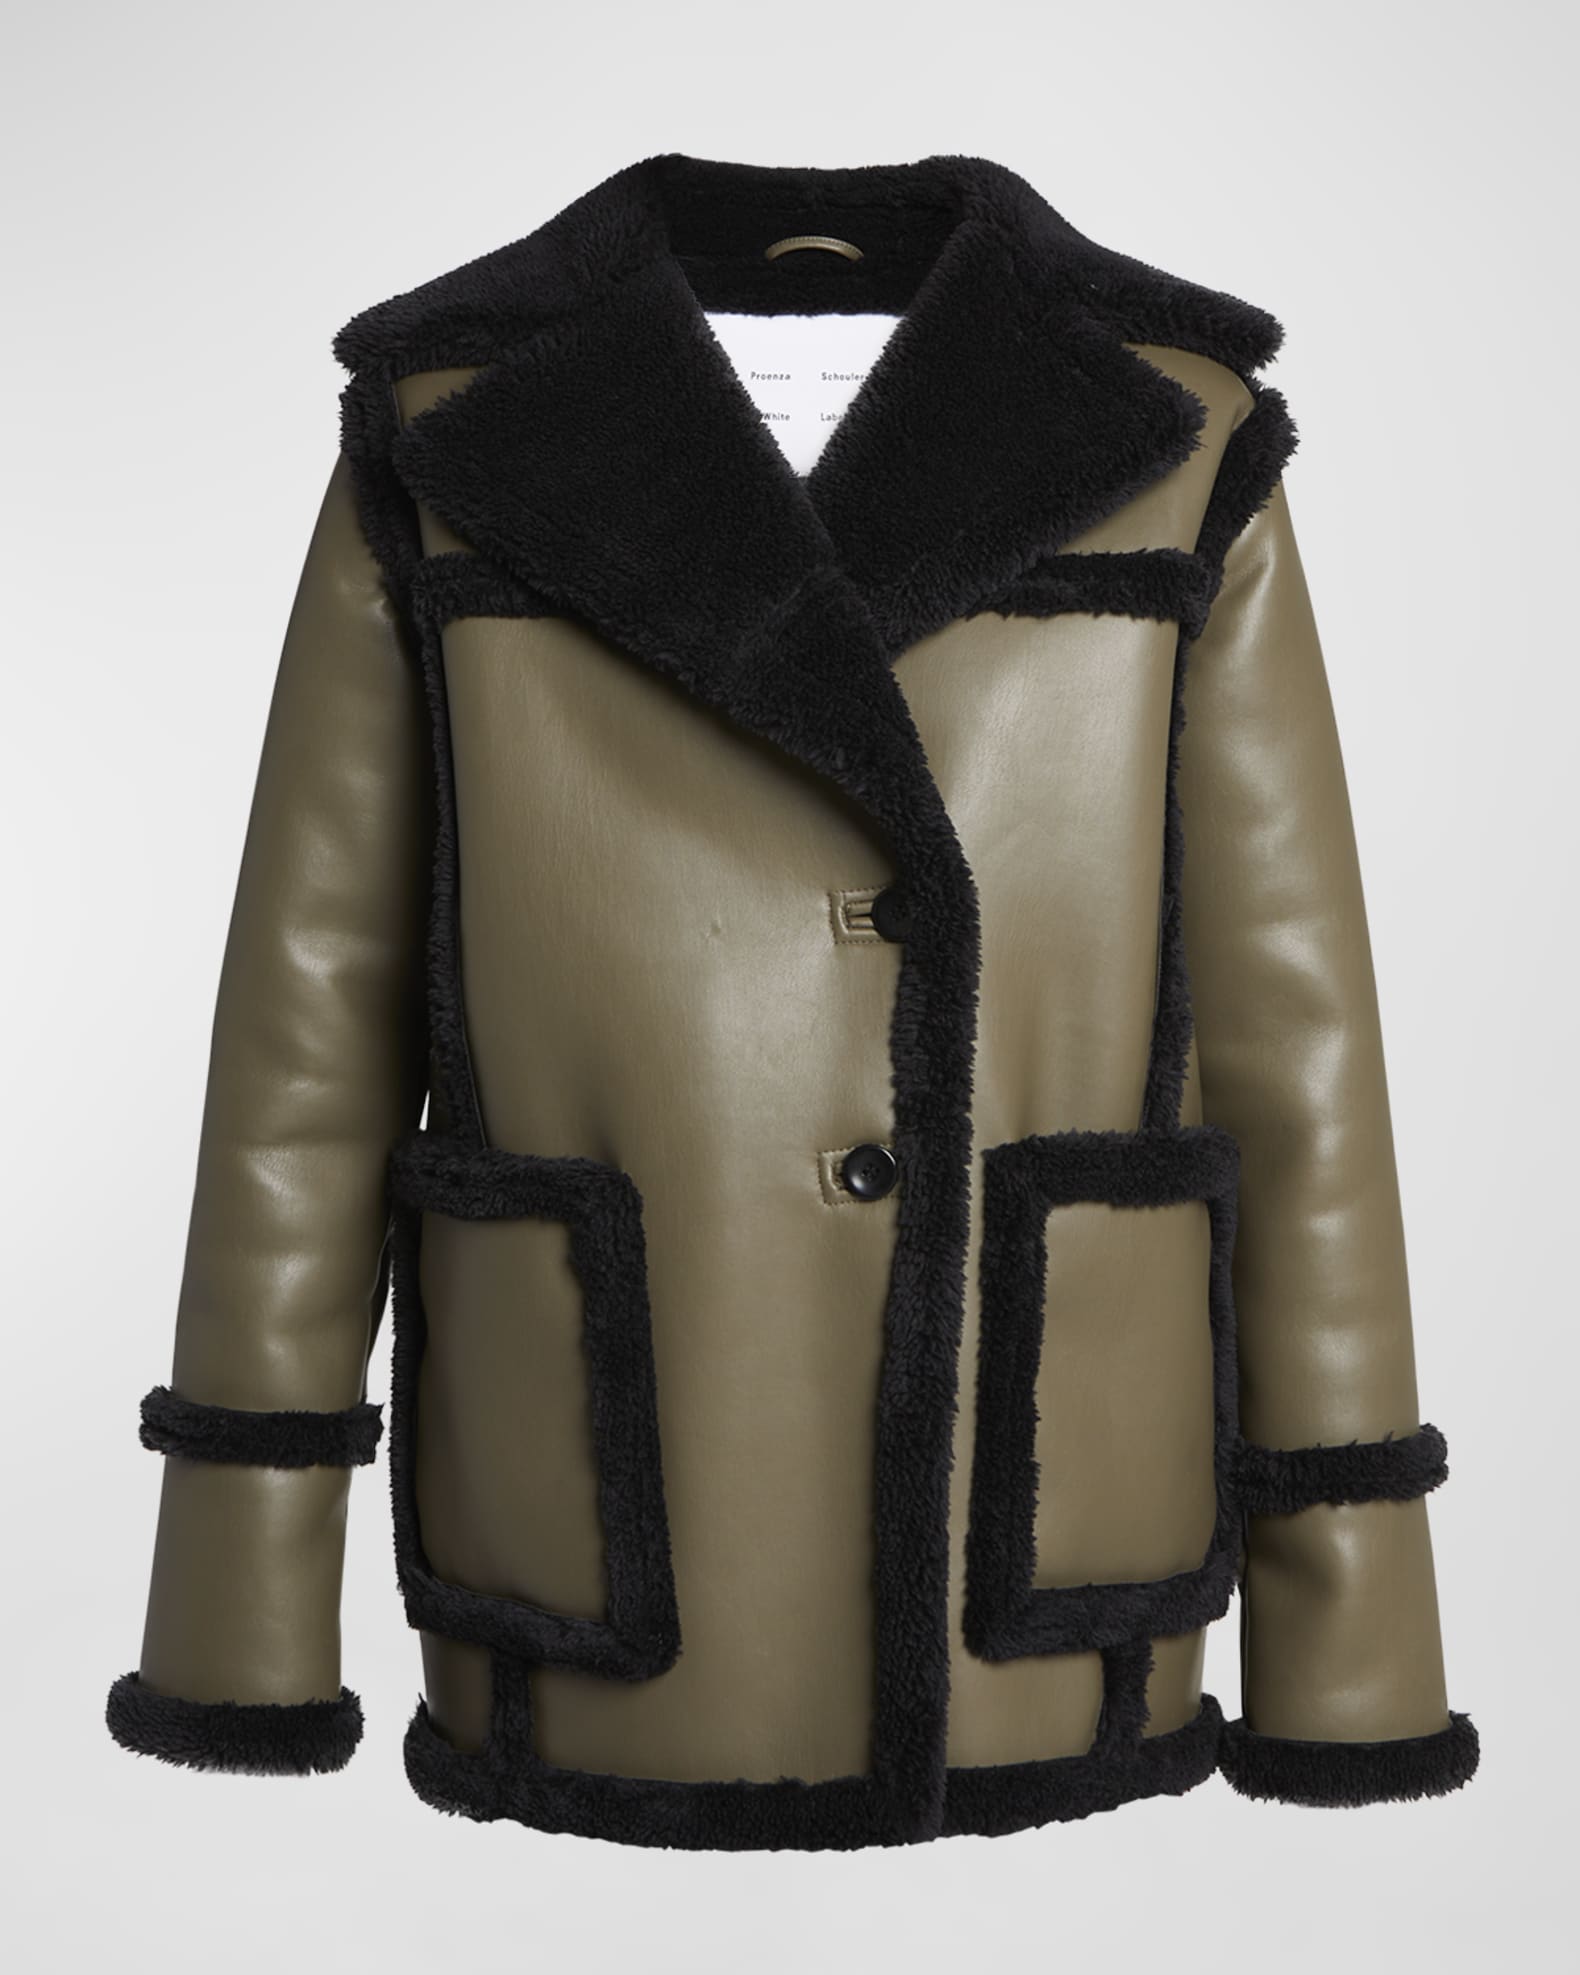 Proenza Schouler White Label Coated Fleece-Lined Jacket | Neiman Marcus